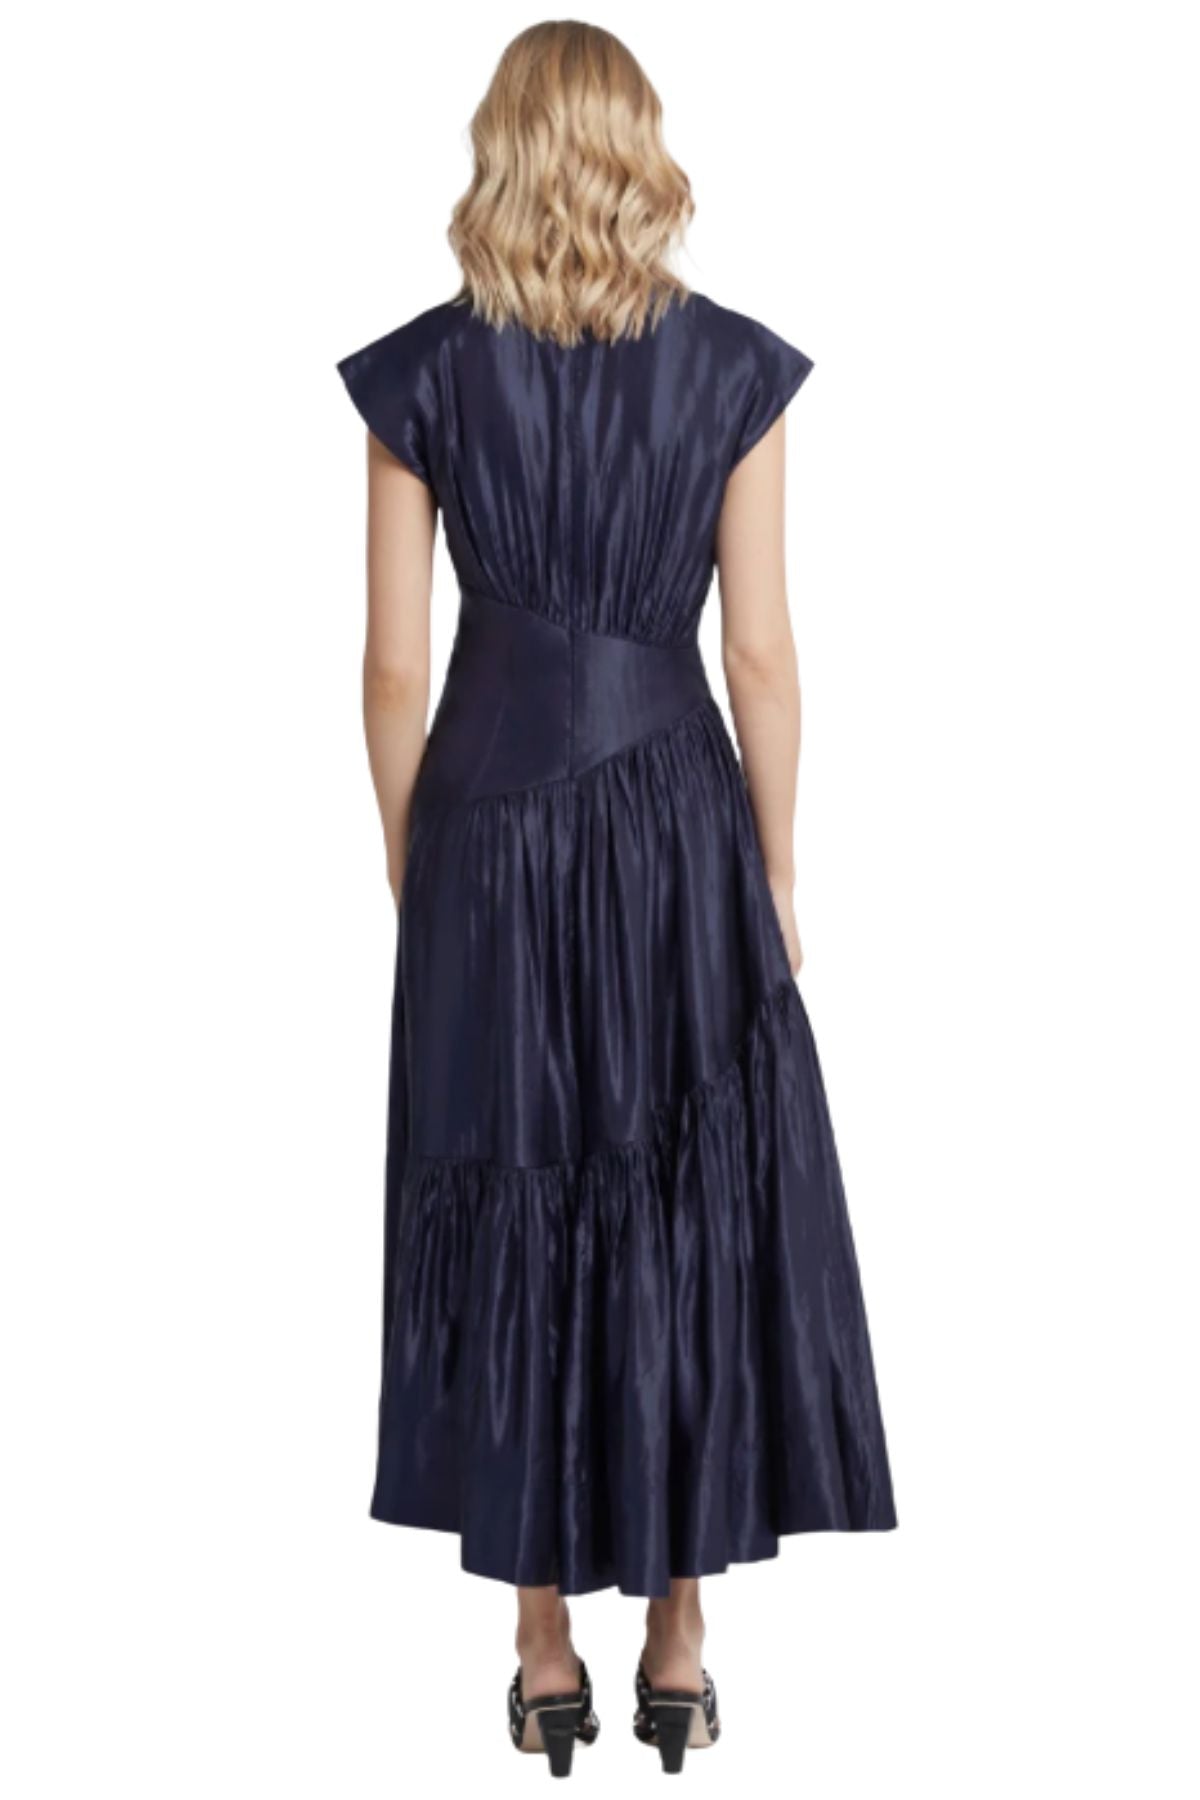 Aje AJE Serendipity Reflection Midi Dress (Navy Blue) - RRP $595 - 3_2b6f1ca7-663a-4c14-81f6-2c3e2eda98ab.jpg